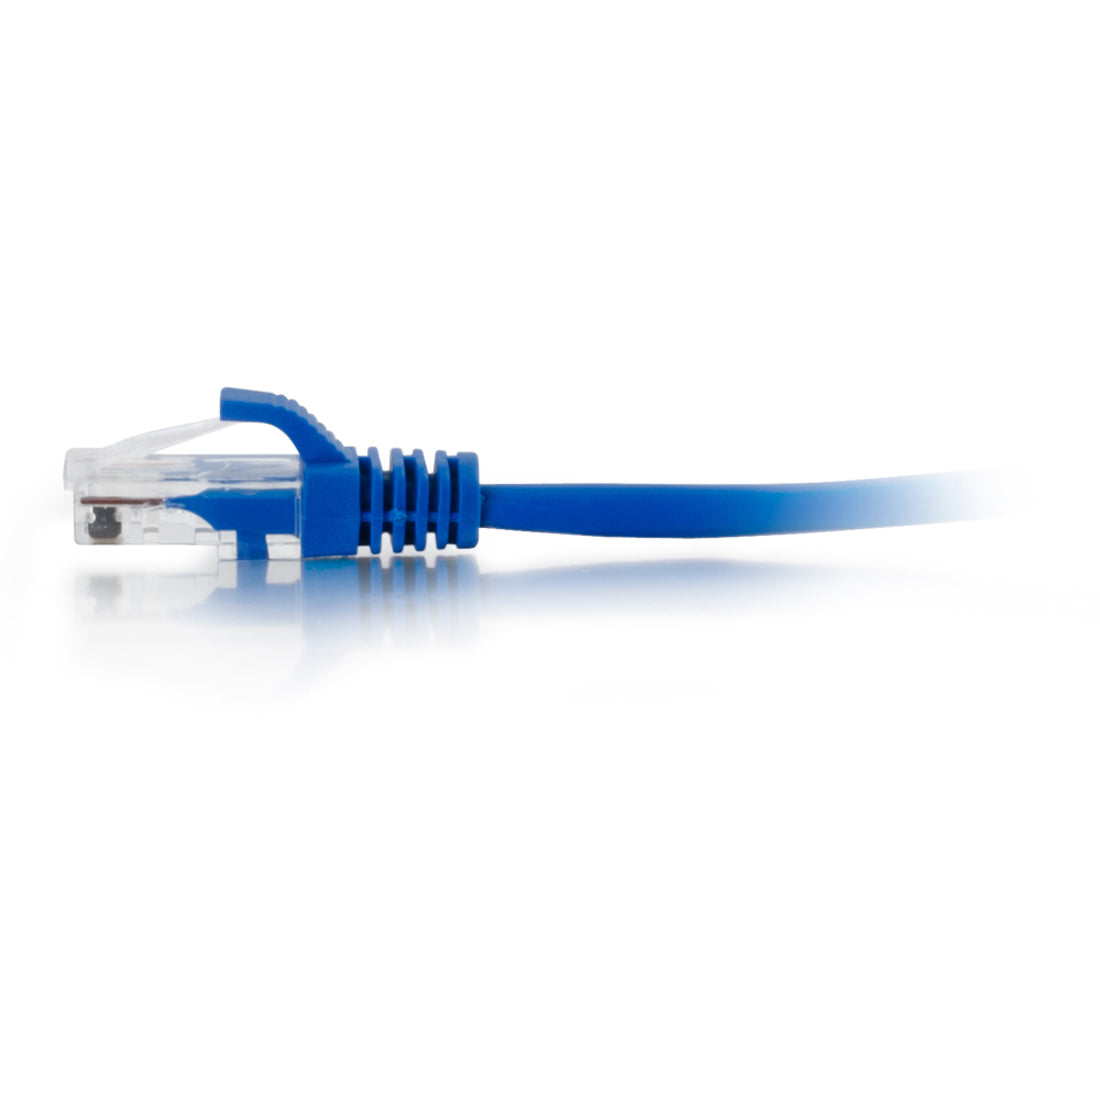 C2G 22012 15ft Cat5e Unshielded Ethernet Cable, Snagless UTP, Blue